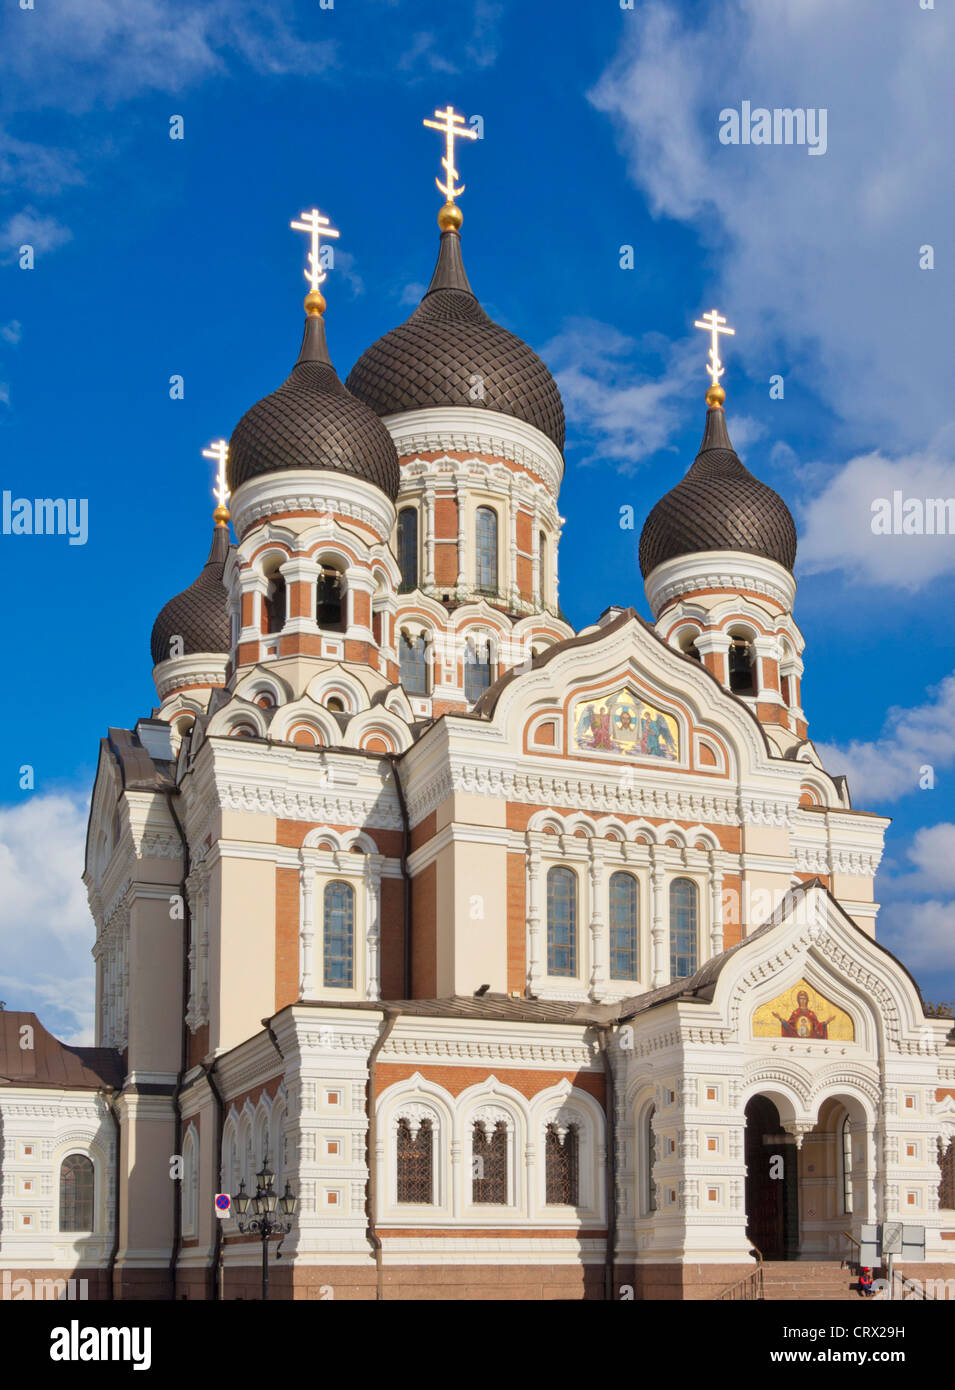 Tallinn centro storico Cattedrale Alexander Nevsky Lossi Plats Toompea Hill Tallinn Estonia EU Europe. Foto Stock